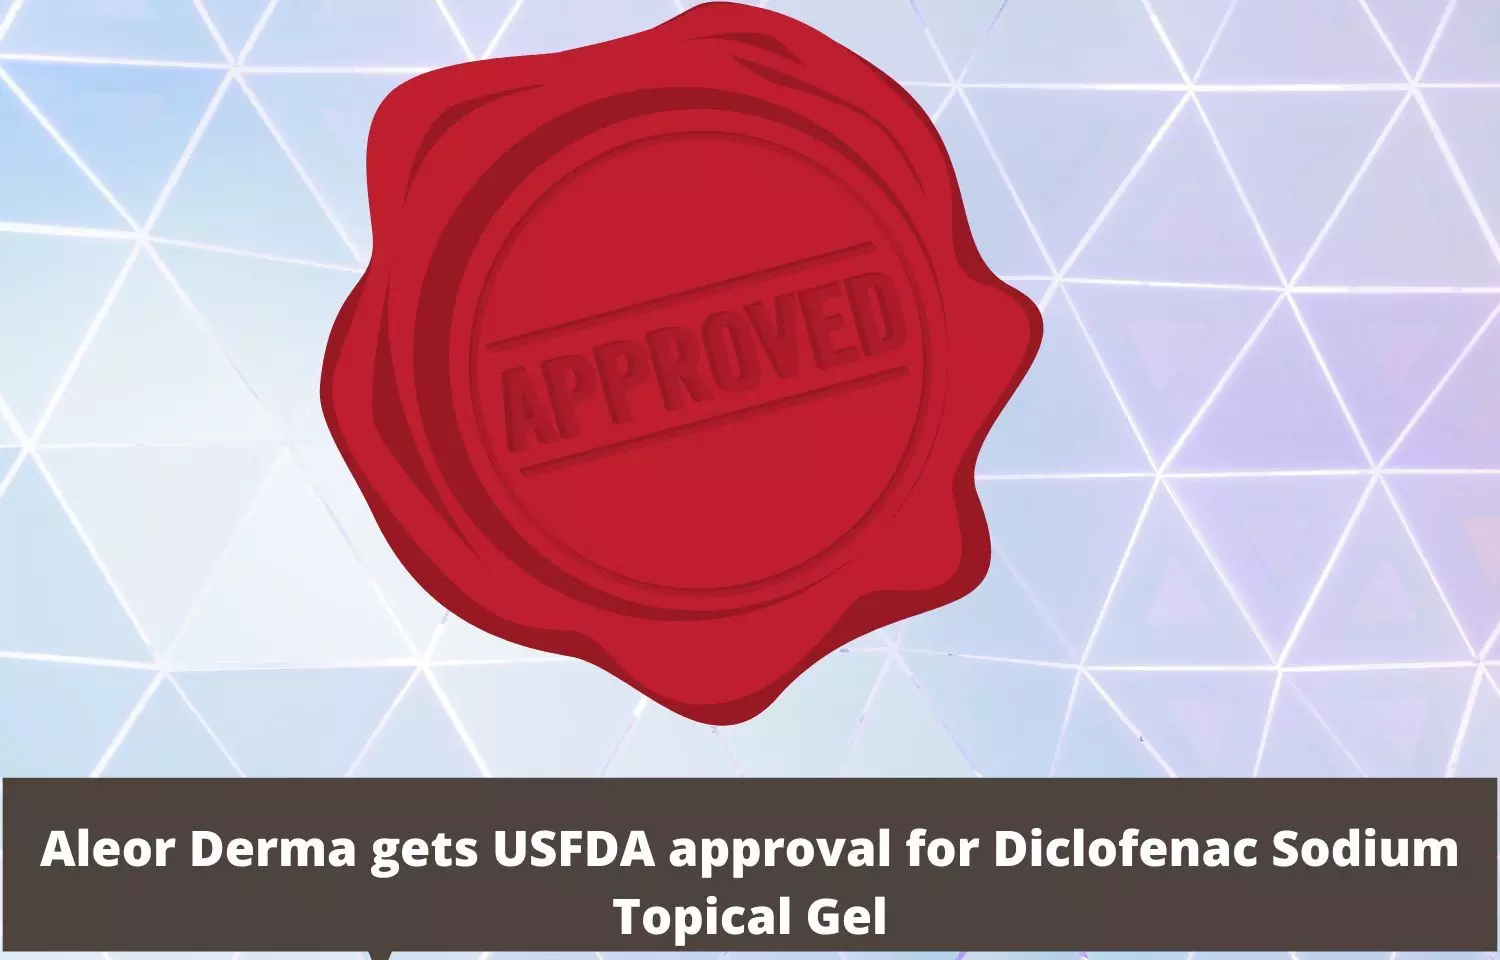 Aleor Derma gets USFDA approval for Diclofenac Sodium Topical Gel